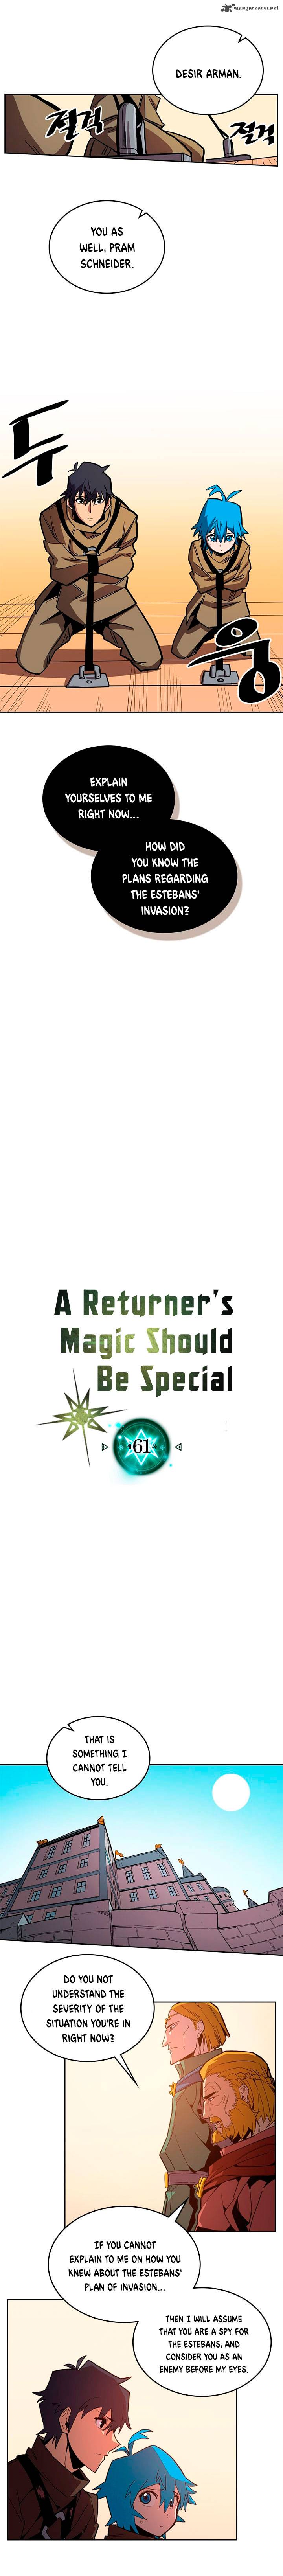 a_returners_magic_should_be_special_61_2